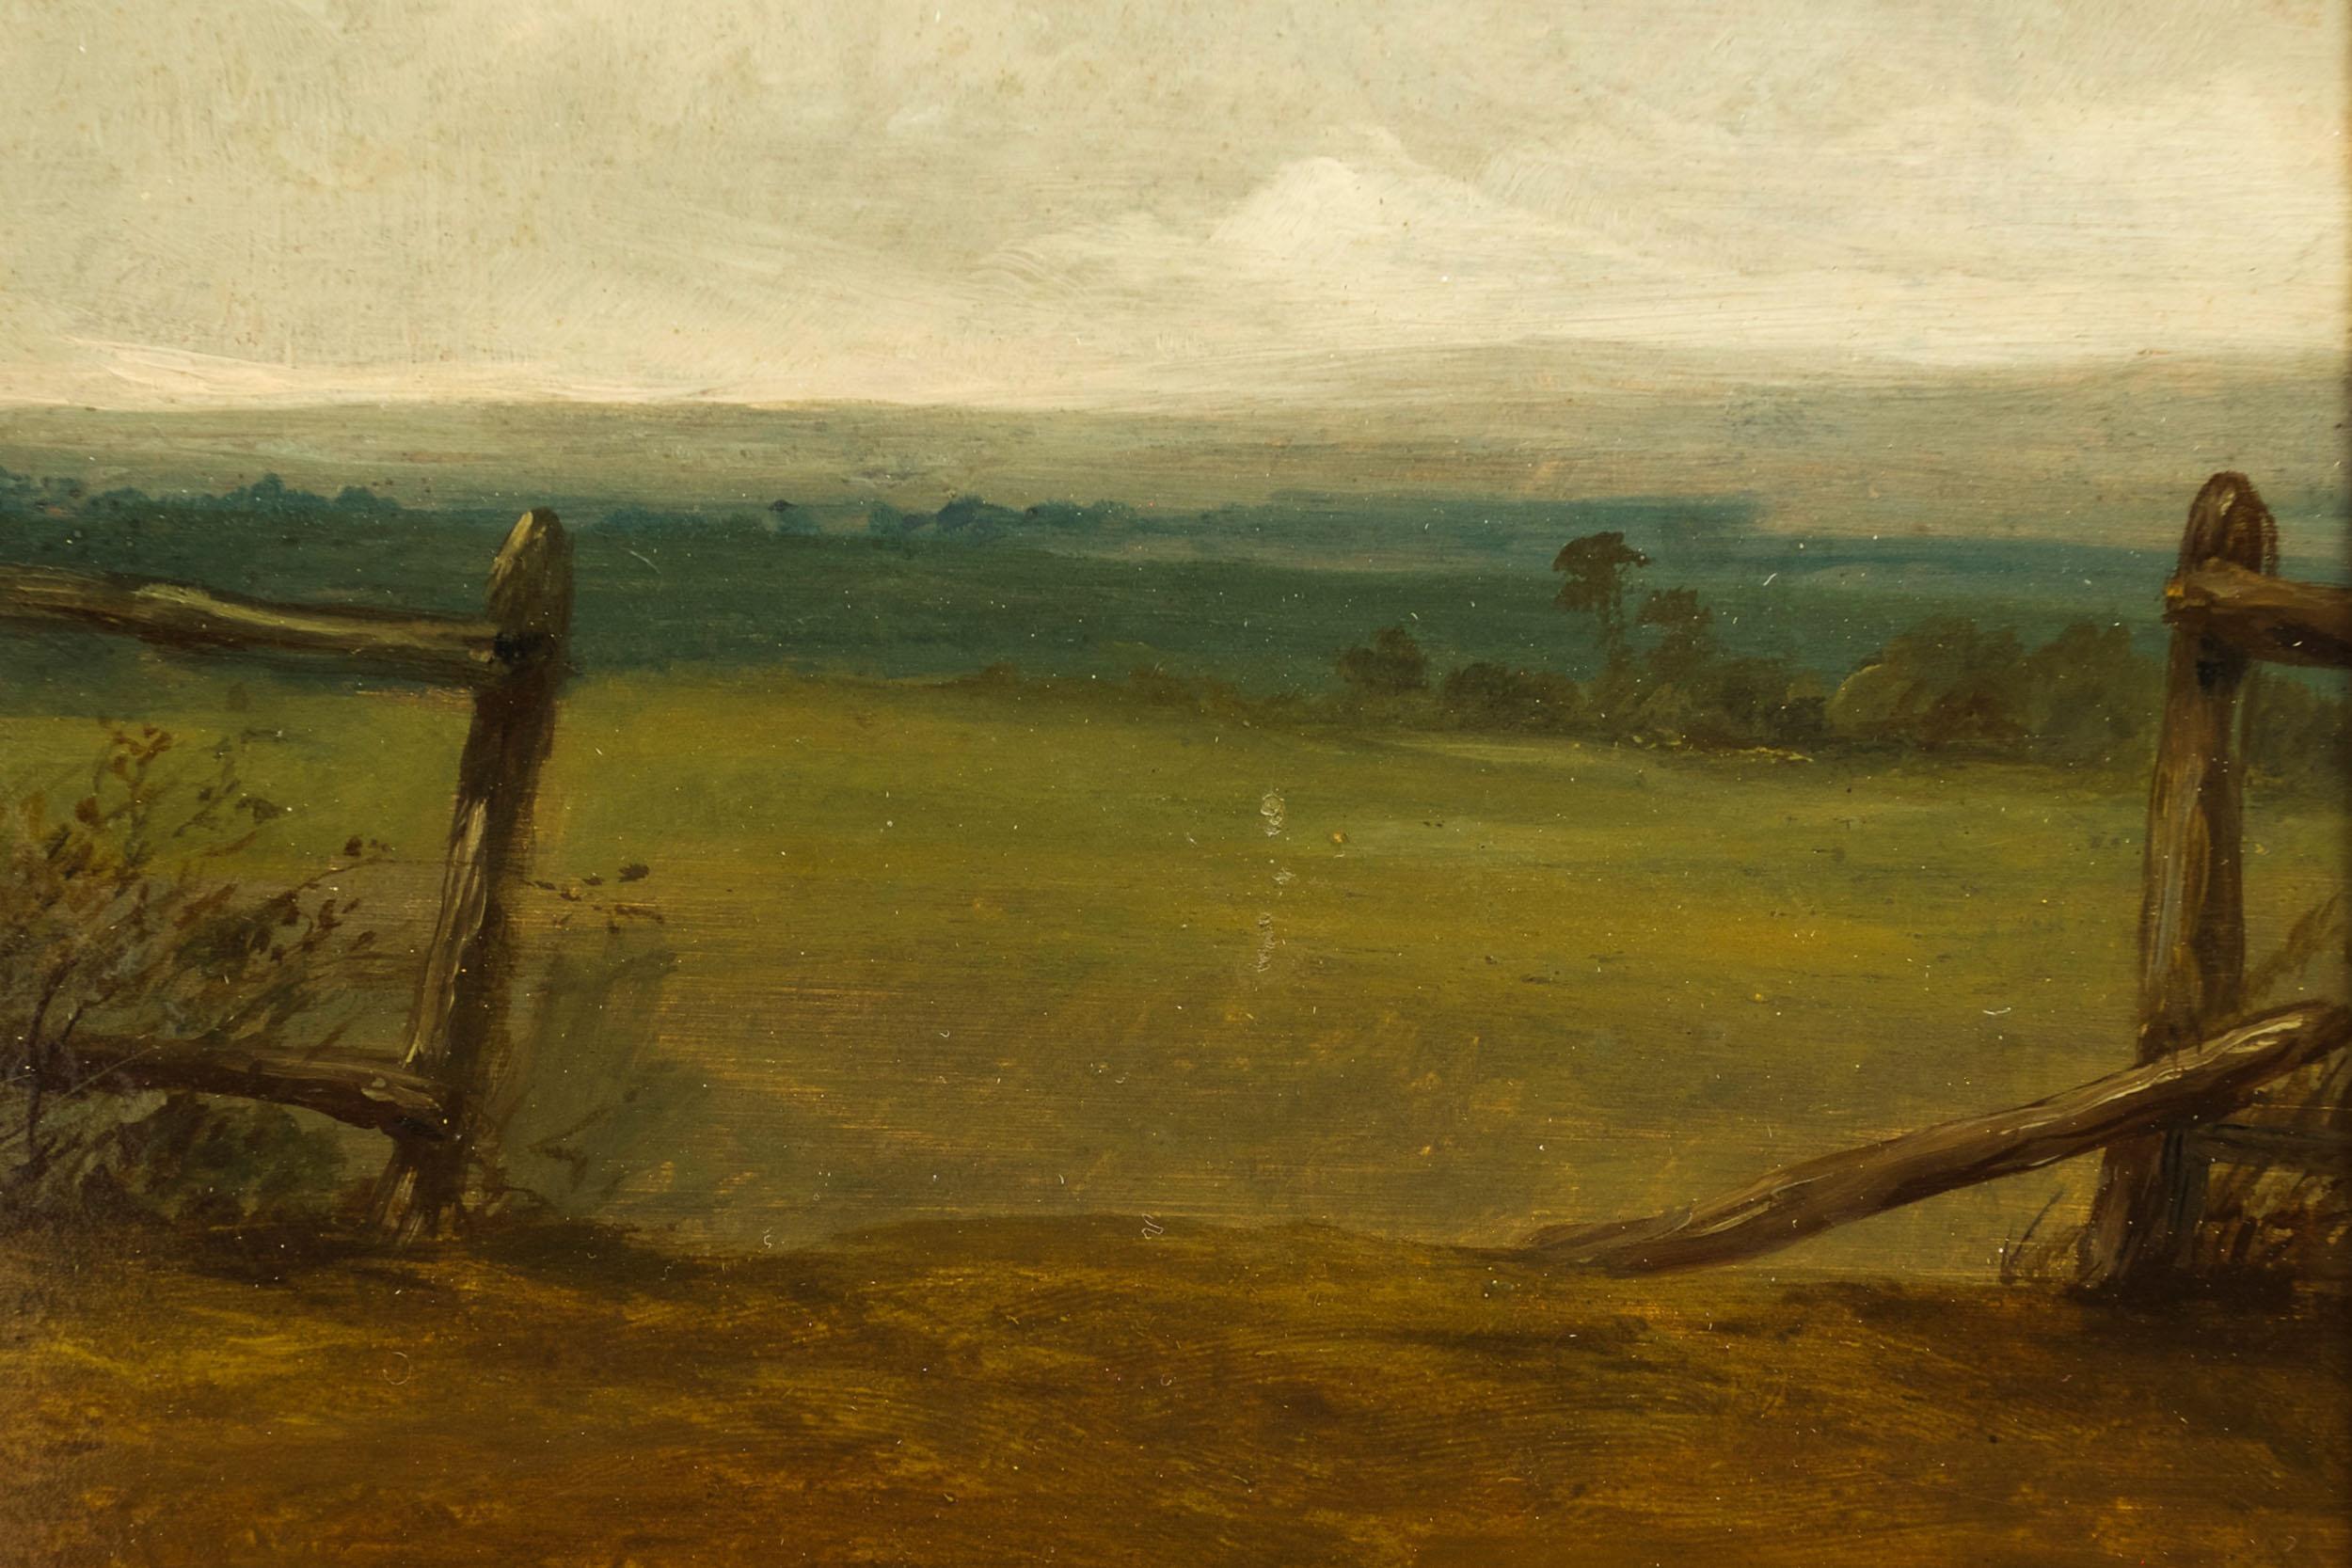 Landscape Painting of Black Stallion 